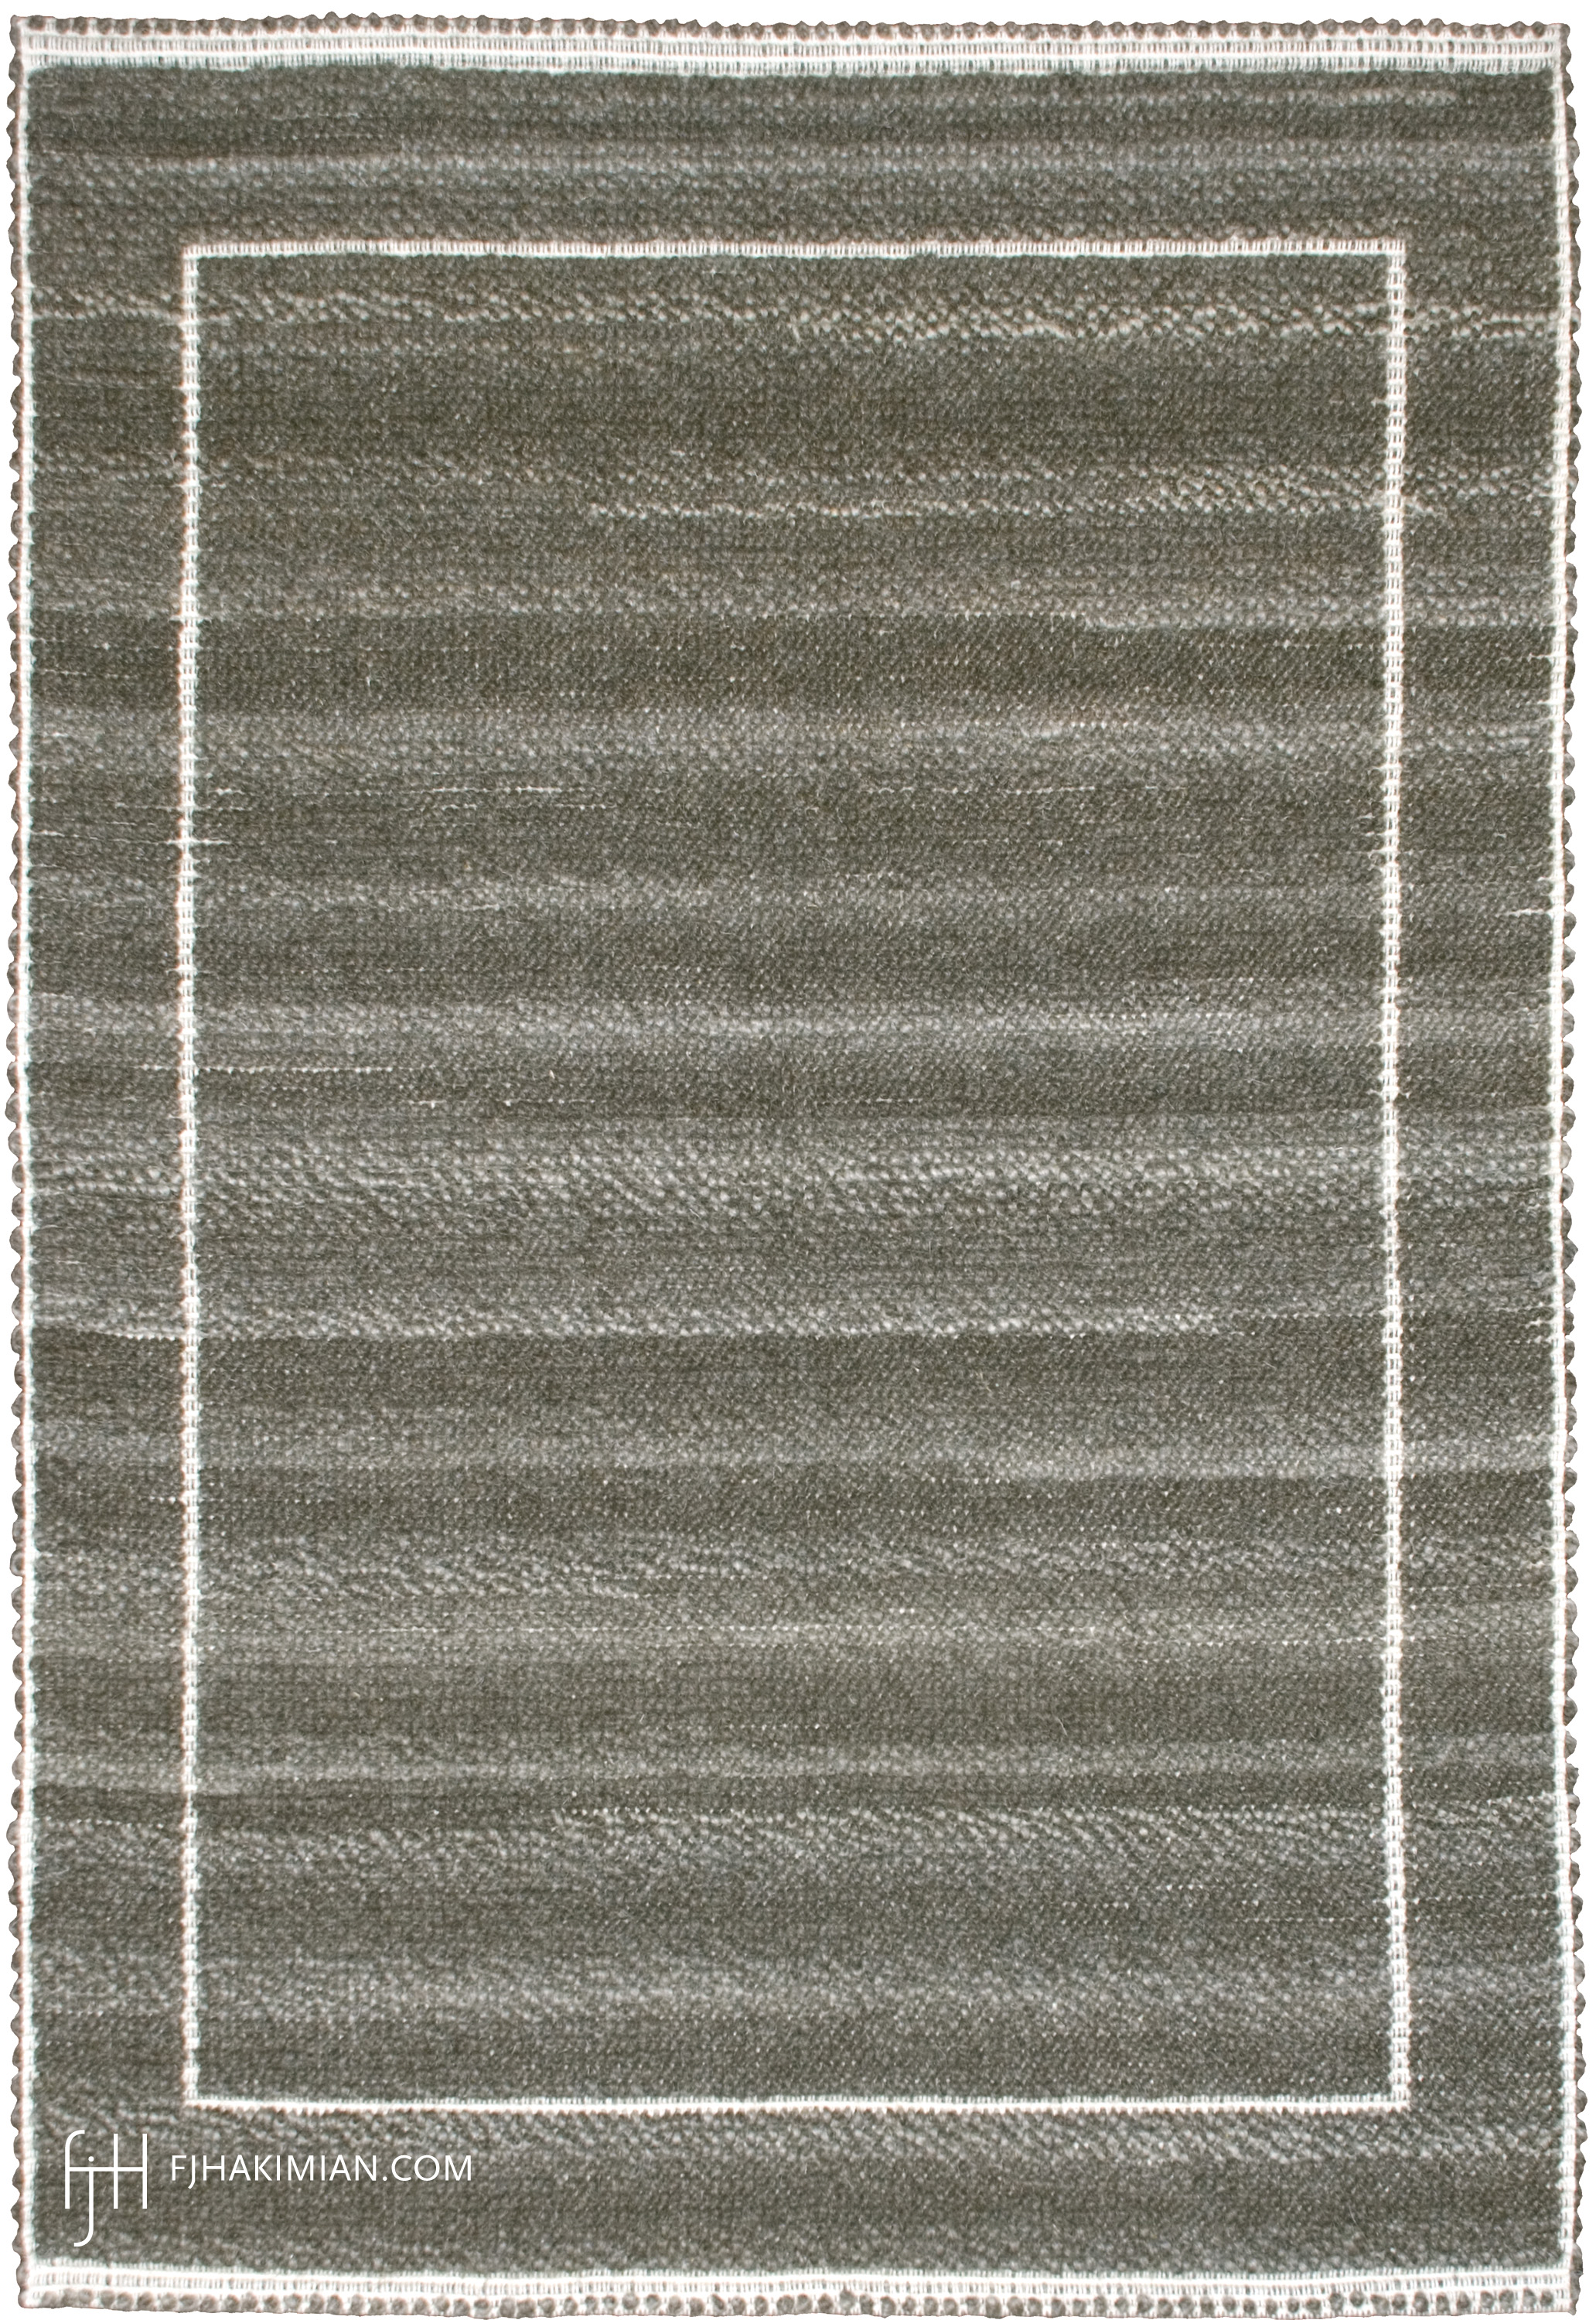 25087 | Custom Sardinian Carpet | FJ Hakimian | Carpet Gallery in NYC